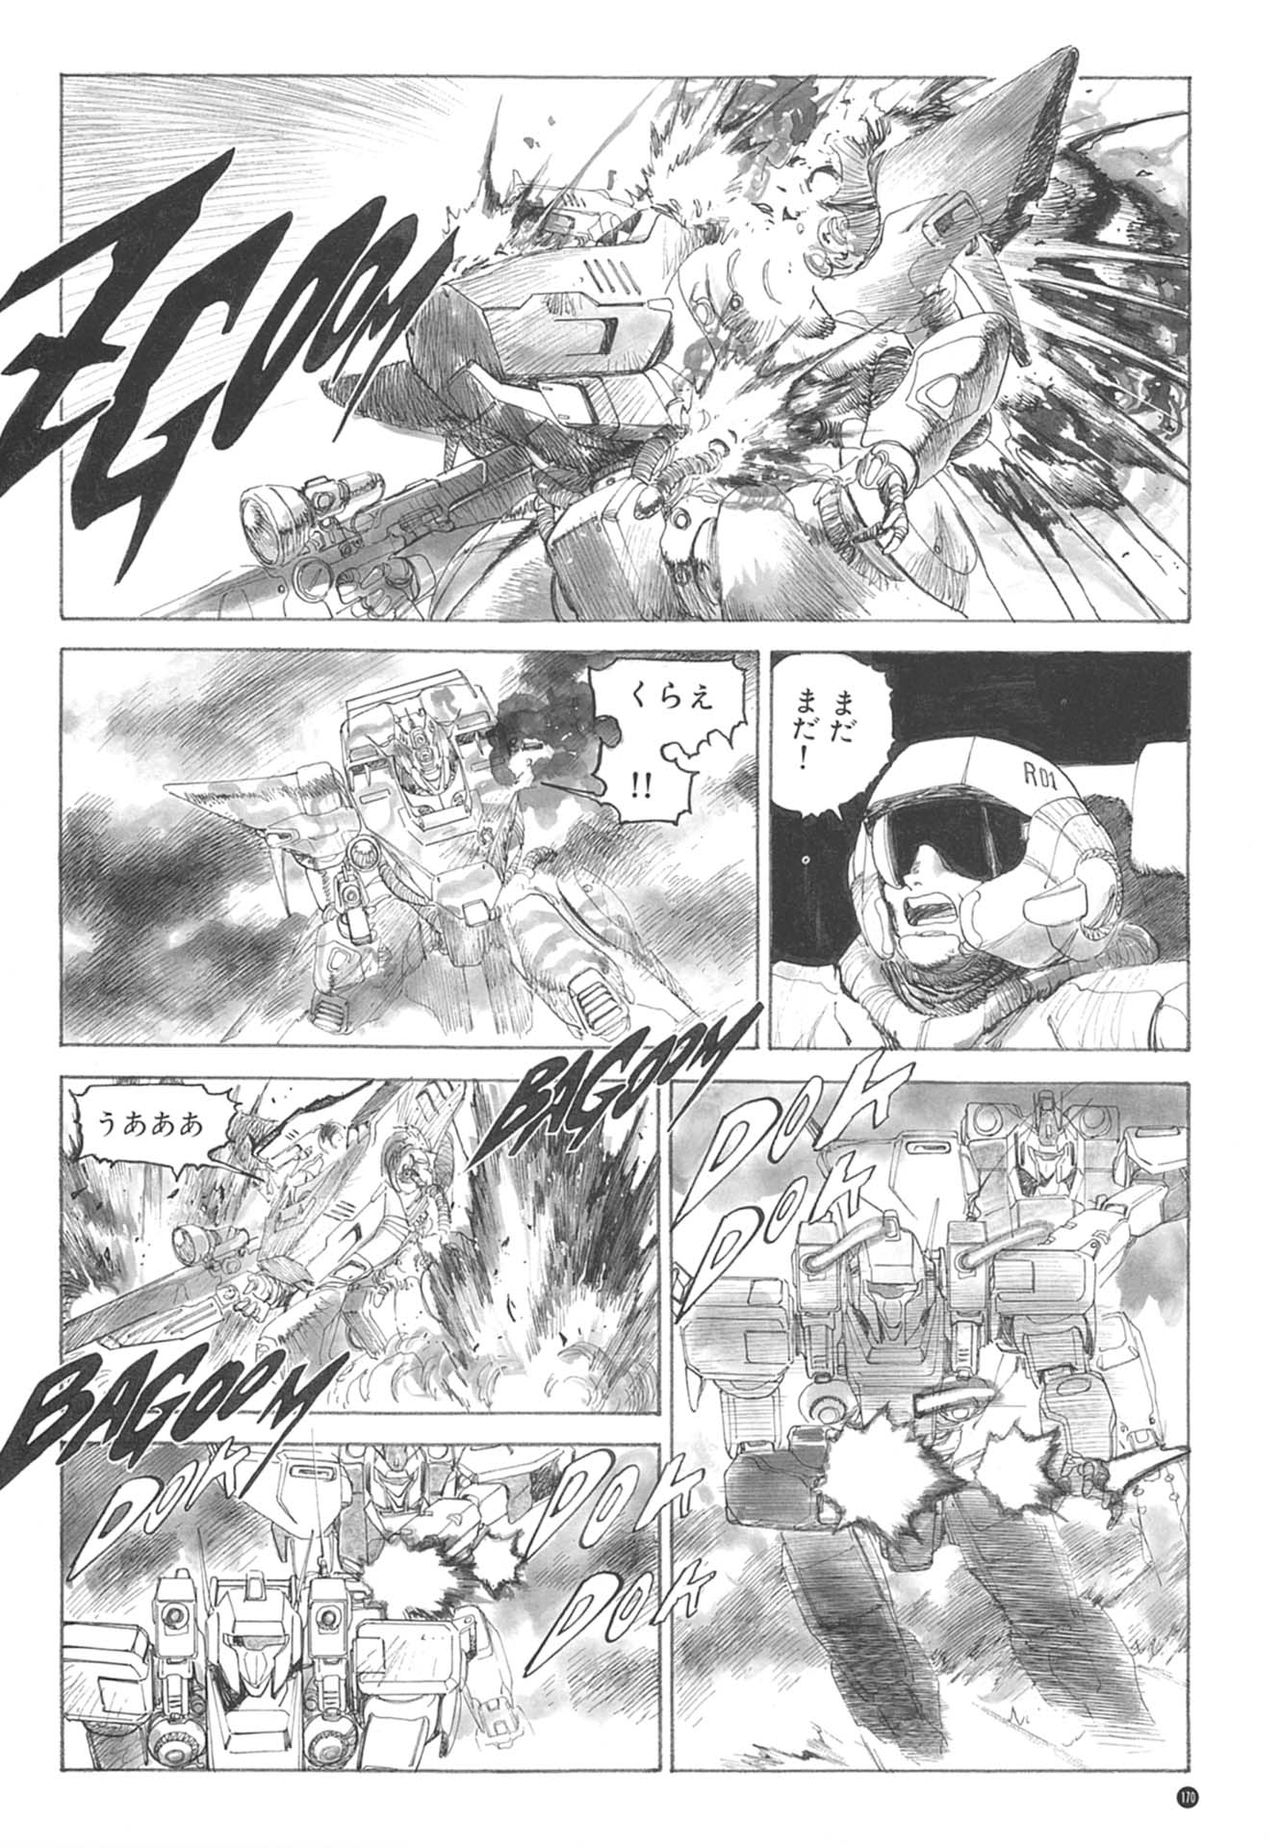 [Kazuhisa Kondo] Kazuhisa Kondo 2D & 3D Works - Go Ahead - From Mobile Suit Gundam to Original Mechanism 169